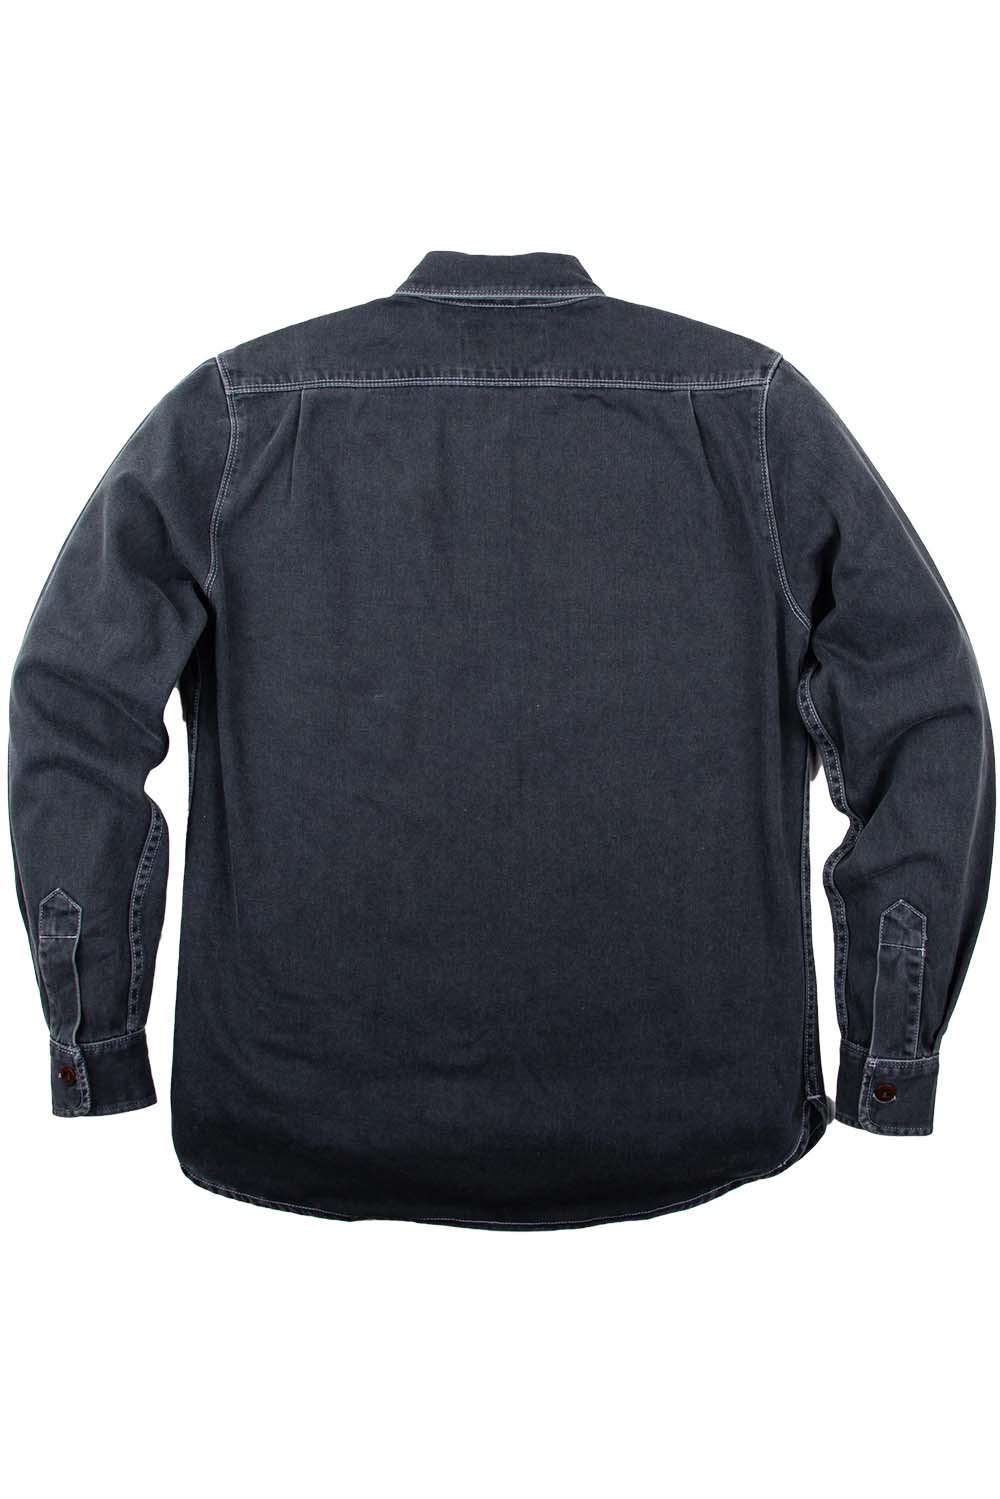 Freenote Cloth - Utility Shirt - Charcoal - Back